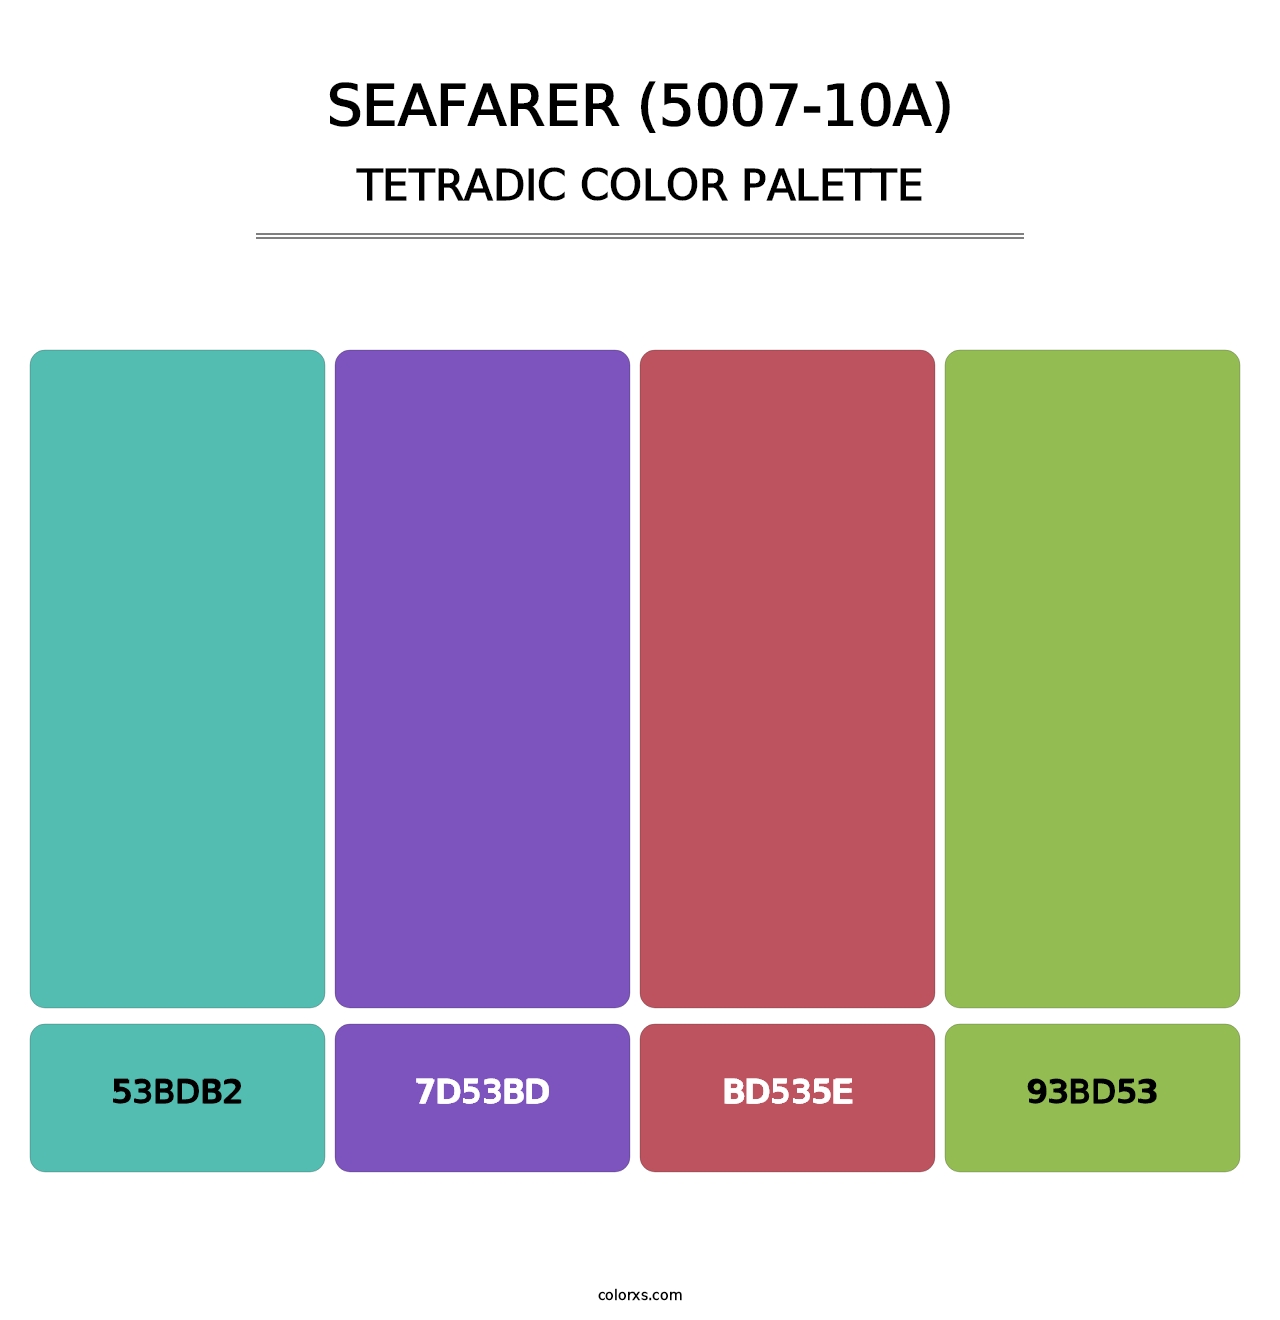 Seafarer (5007-10A) - Tetradic Color Palette